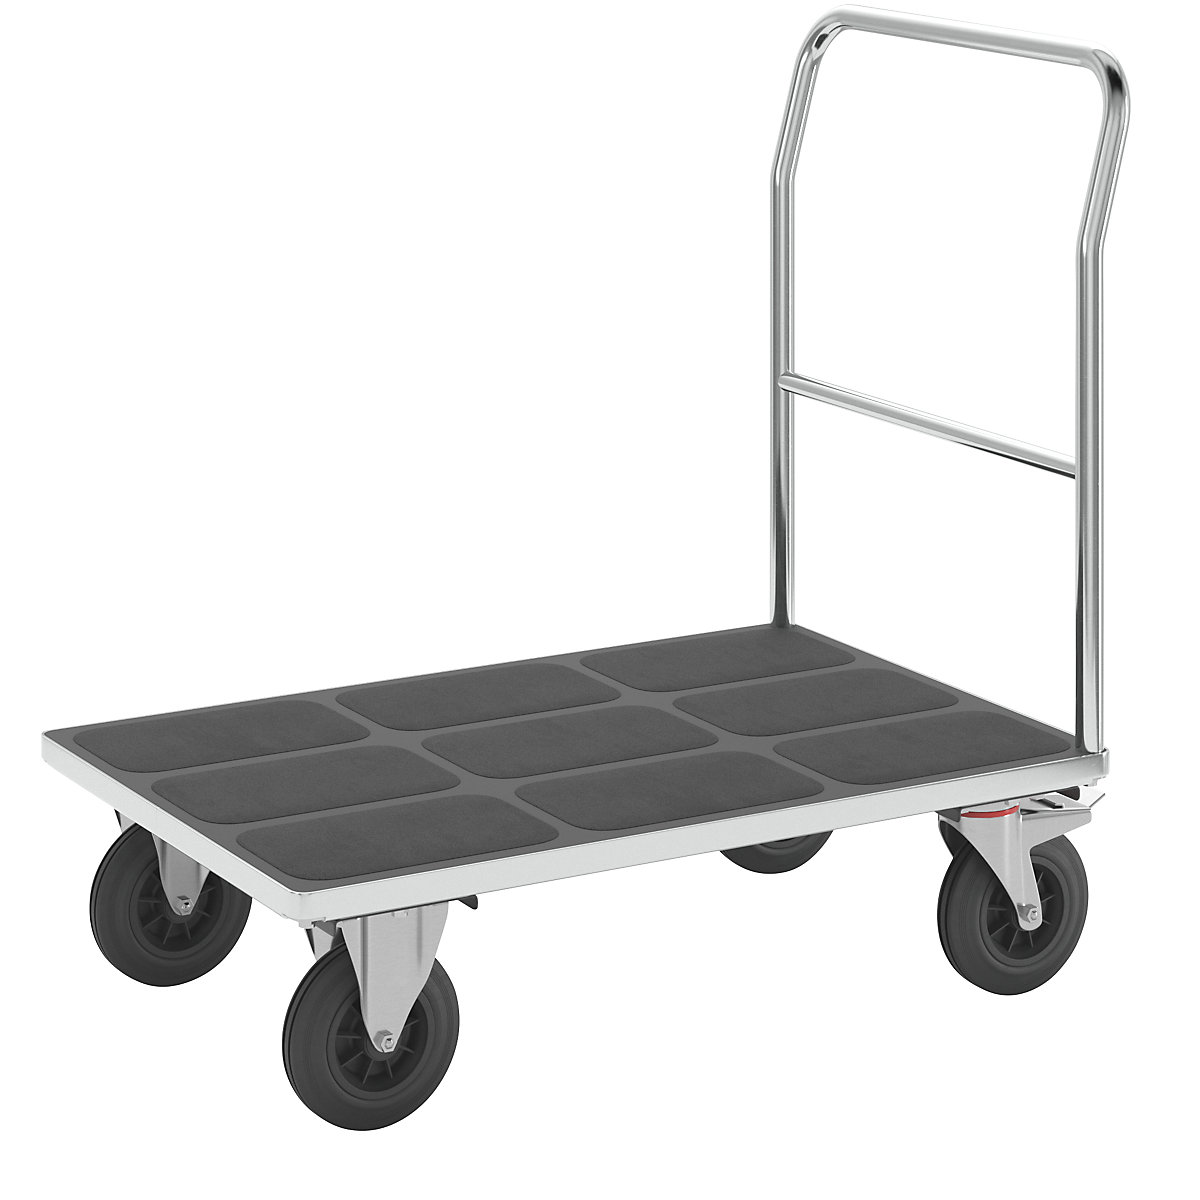 Ploski voziček – eurokraft pro